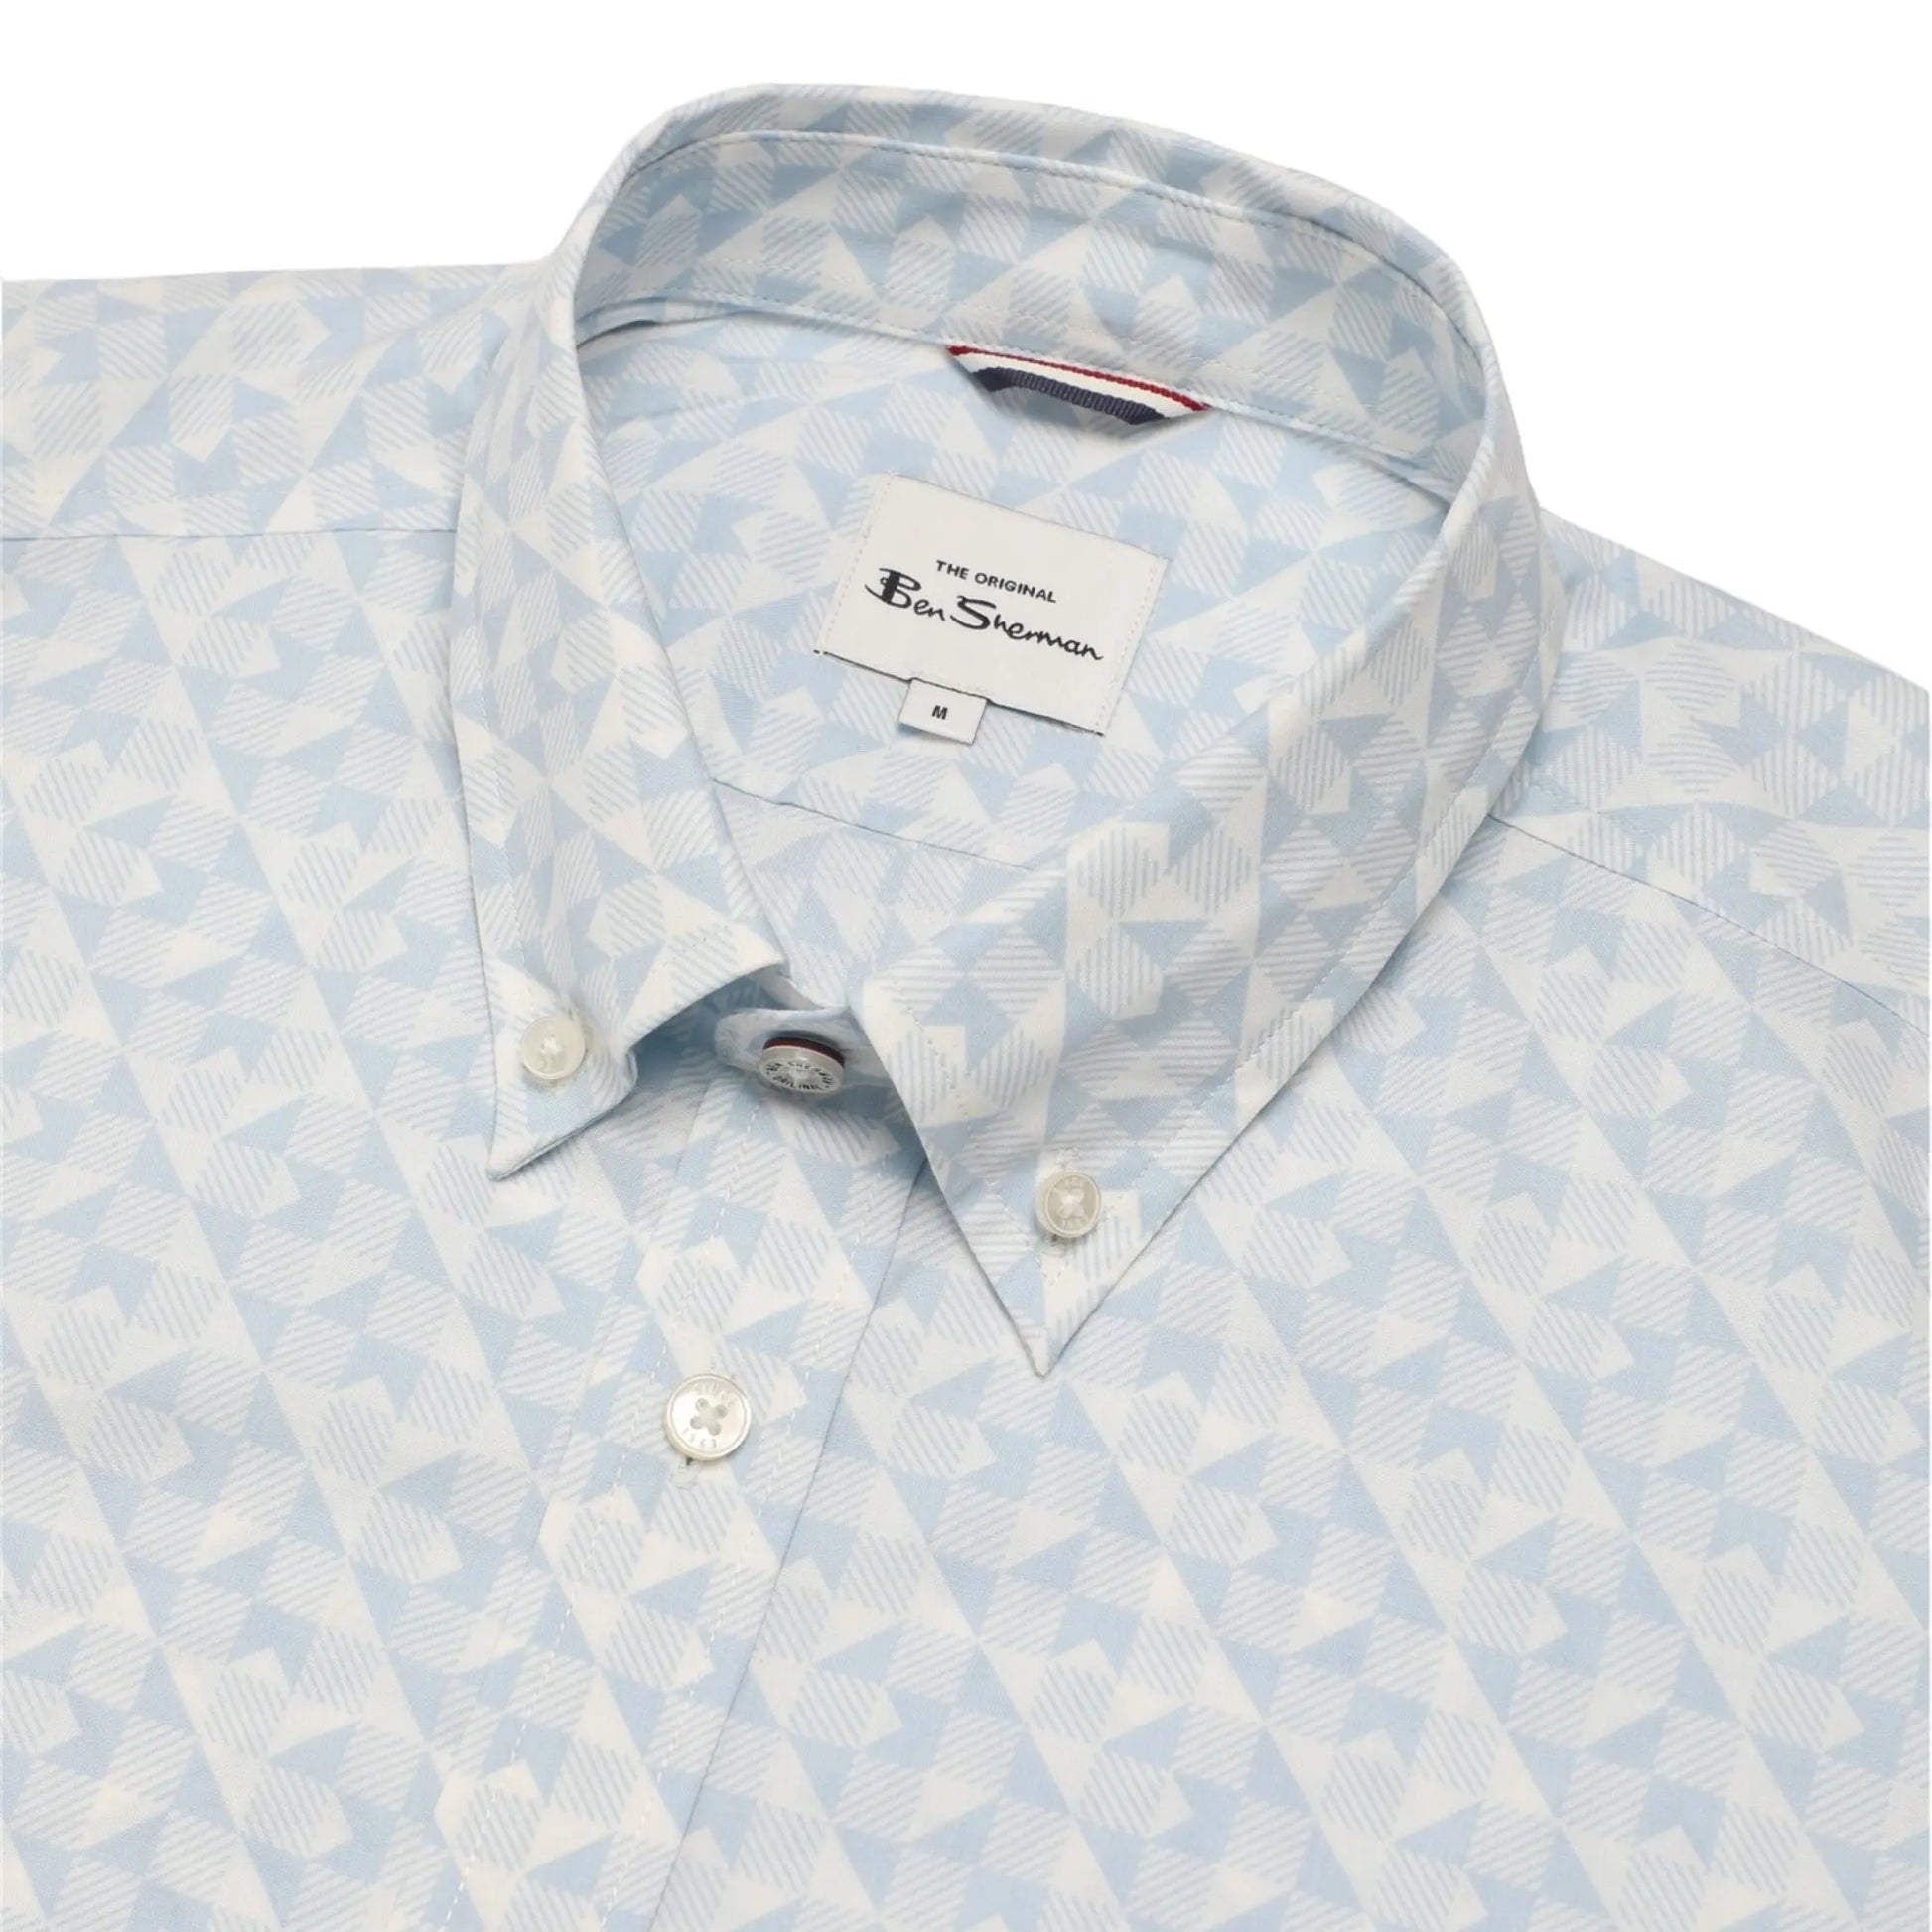 Buy Ben Sherman Optic Geo Print Short Sleeve Shirt - Blue | Short-Sleeved Shirtss at Woven Durham